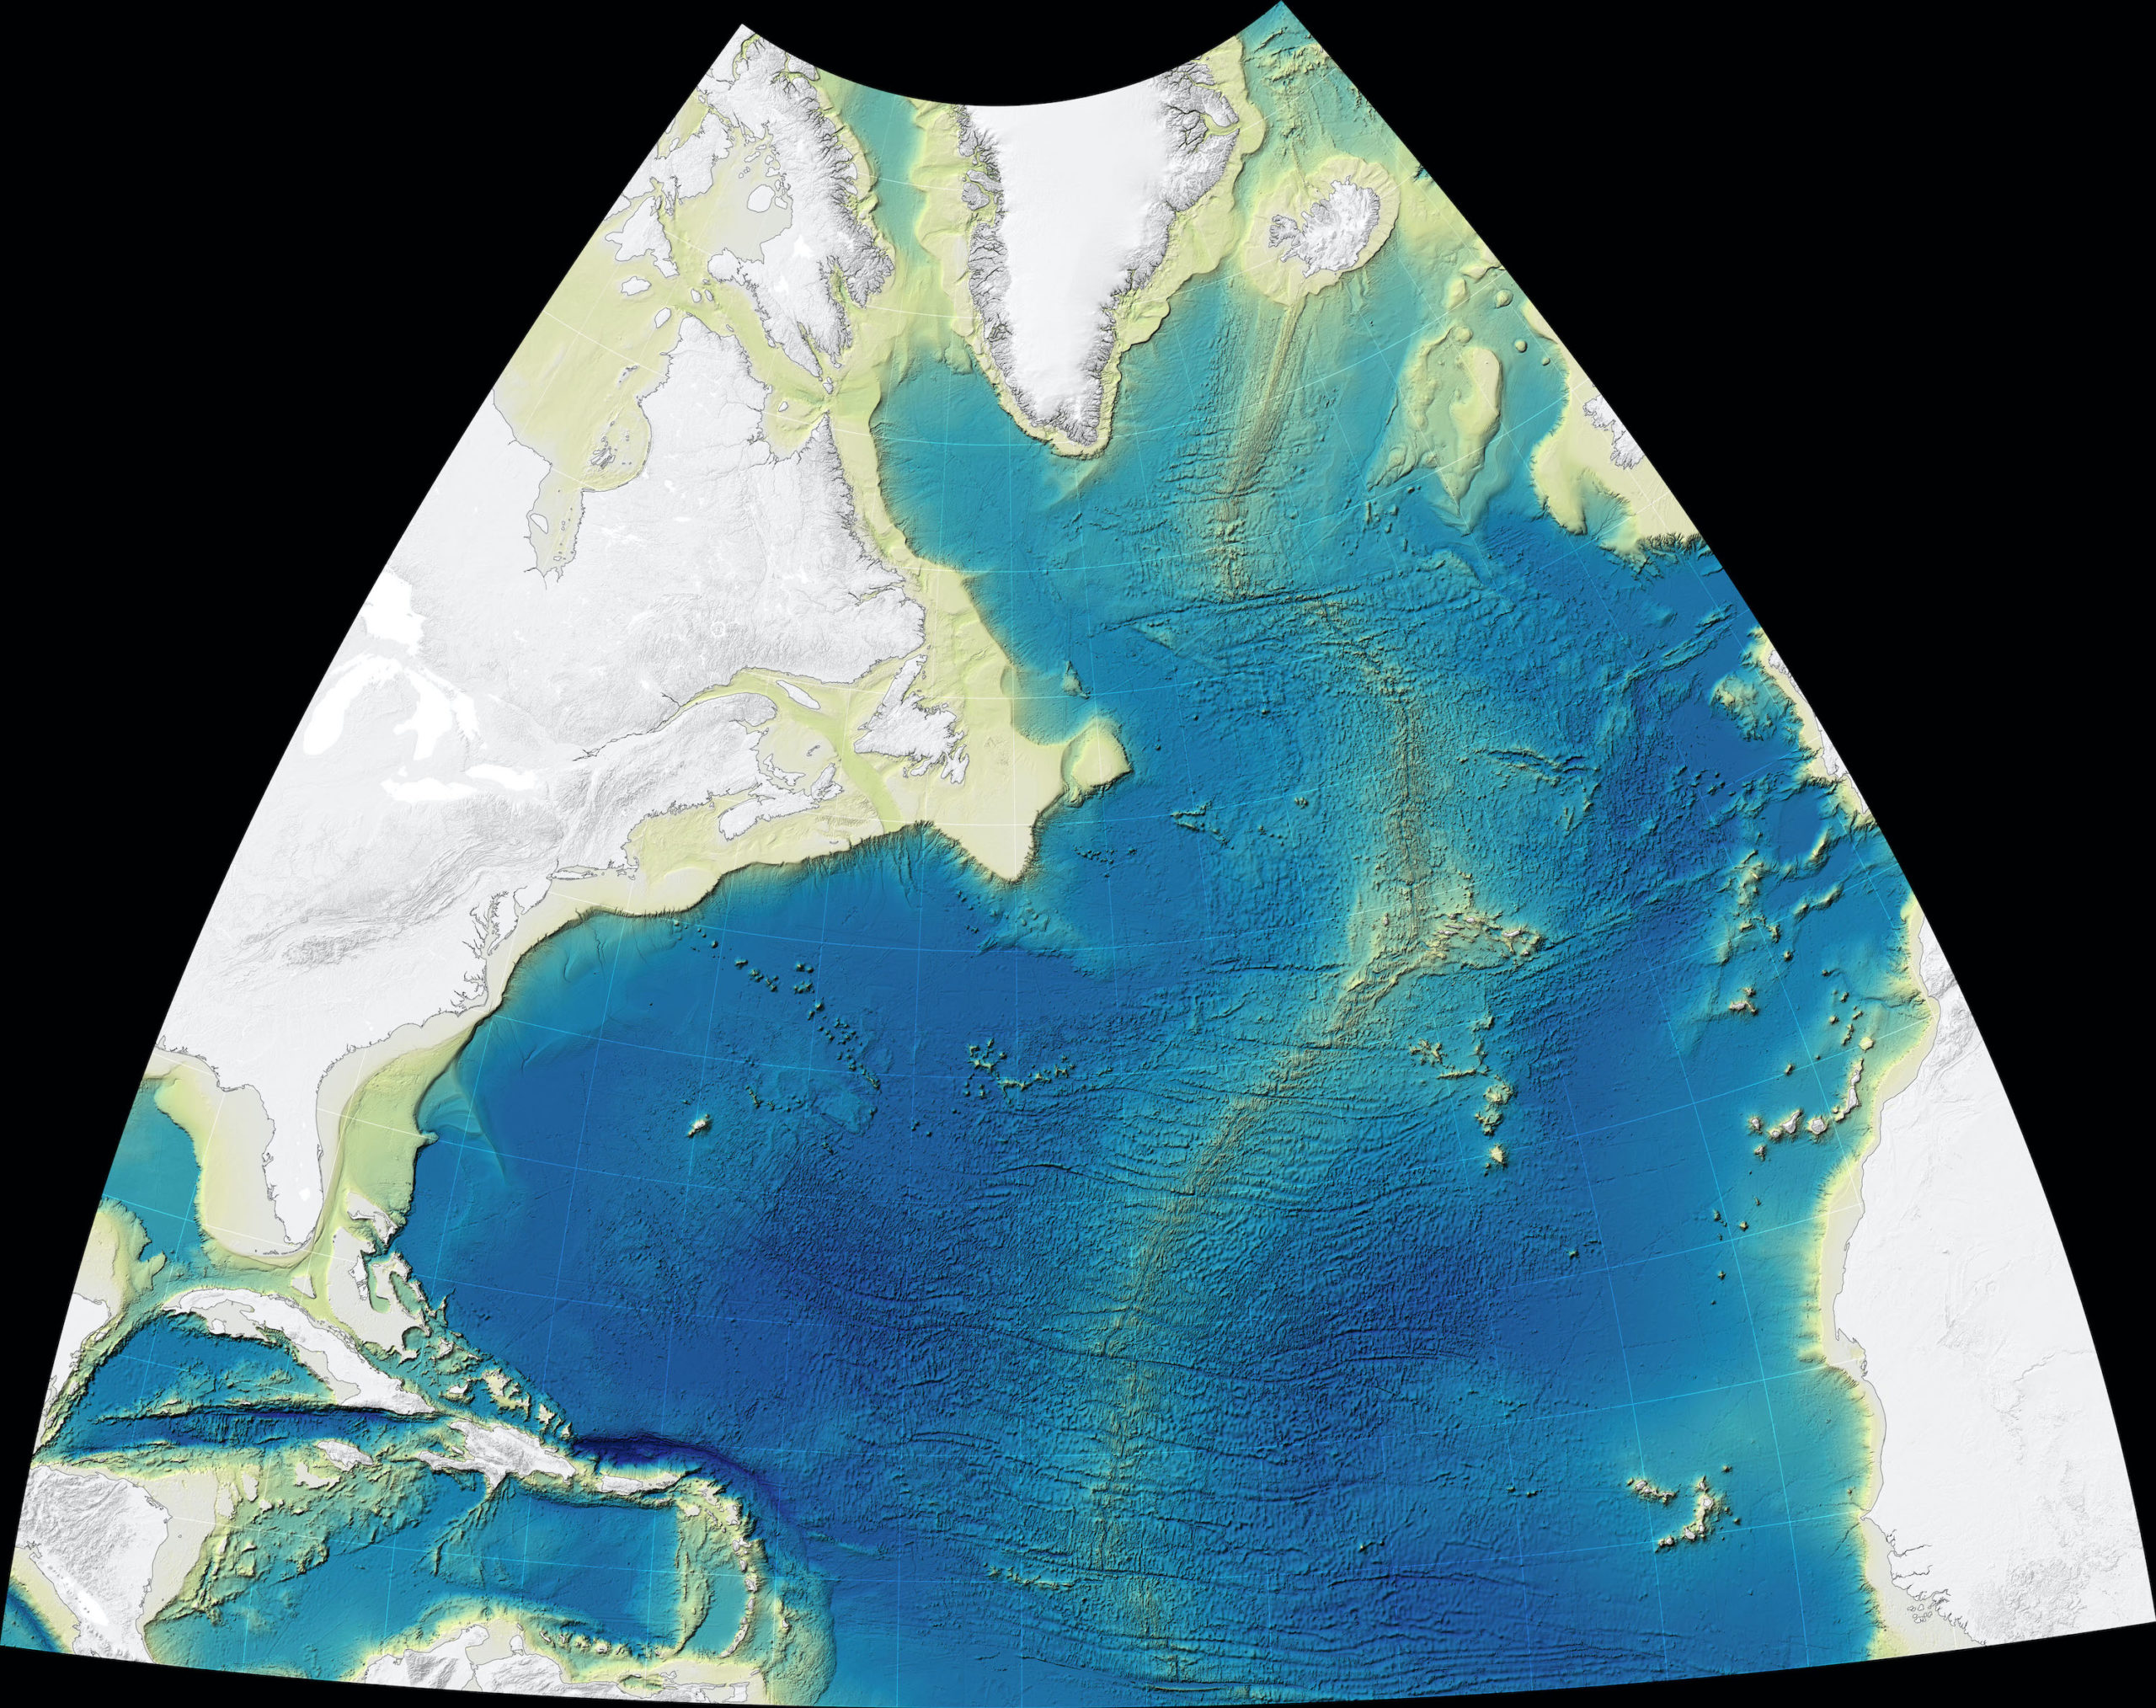 Atlantic Ocean Topographic Map 